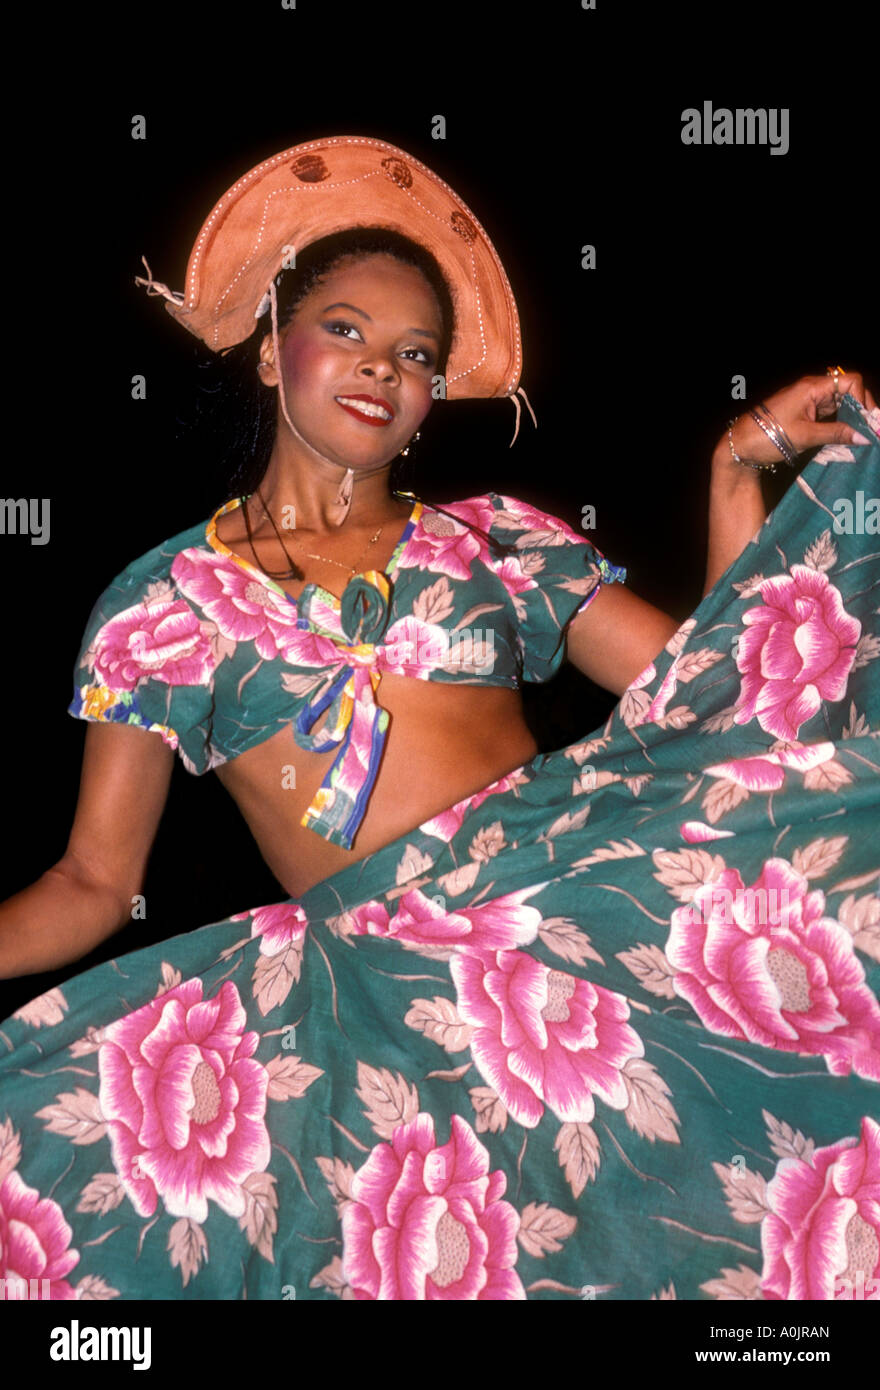 cowgirl, Xaxado dance, Brazilian woman, Brazilian, dancer, carnival costume, nightclub performance, Rio de Janeiro, Rio de Janeiro State, Brazil Stock Photo